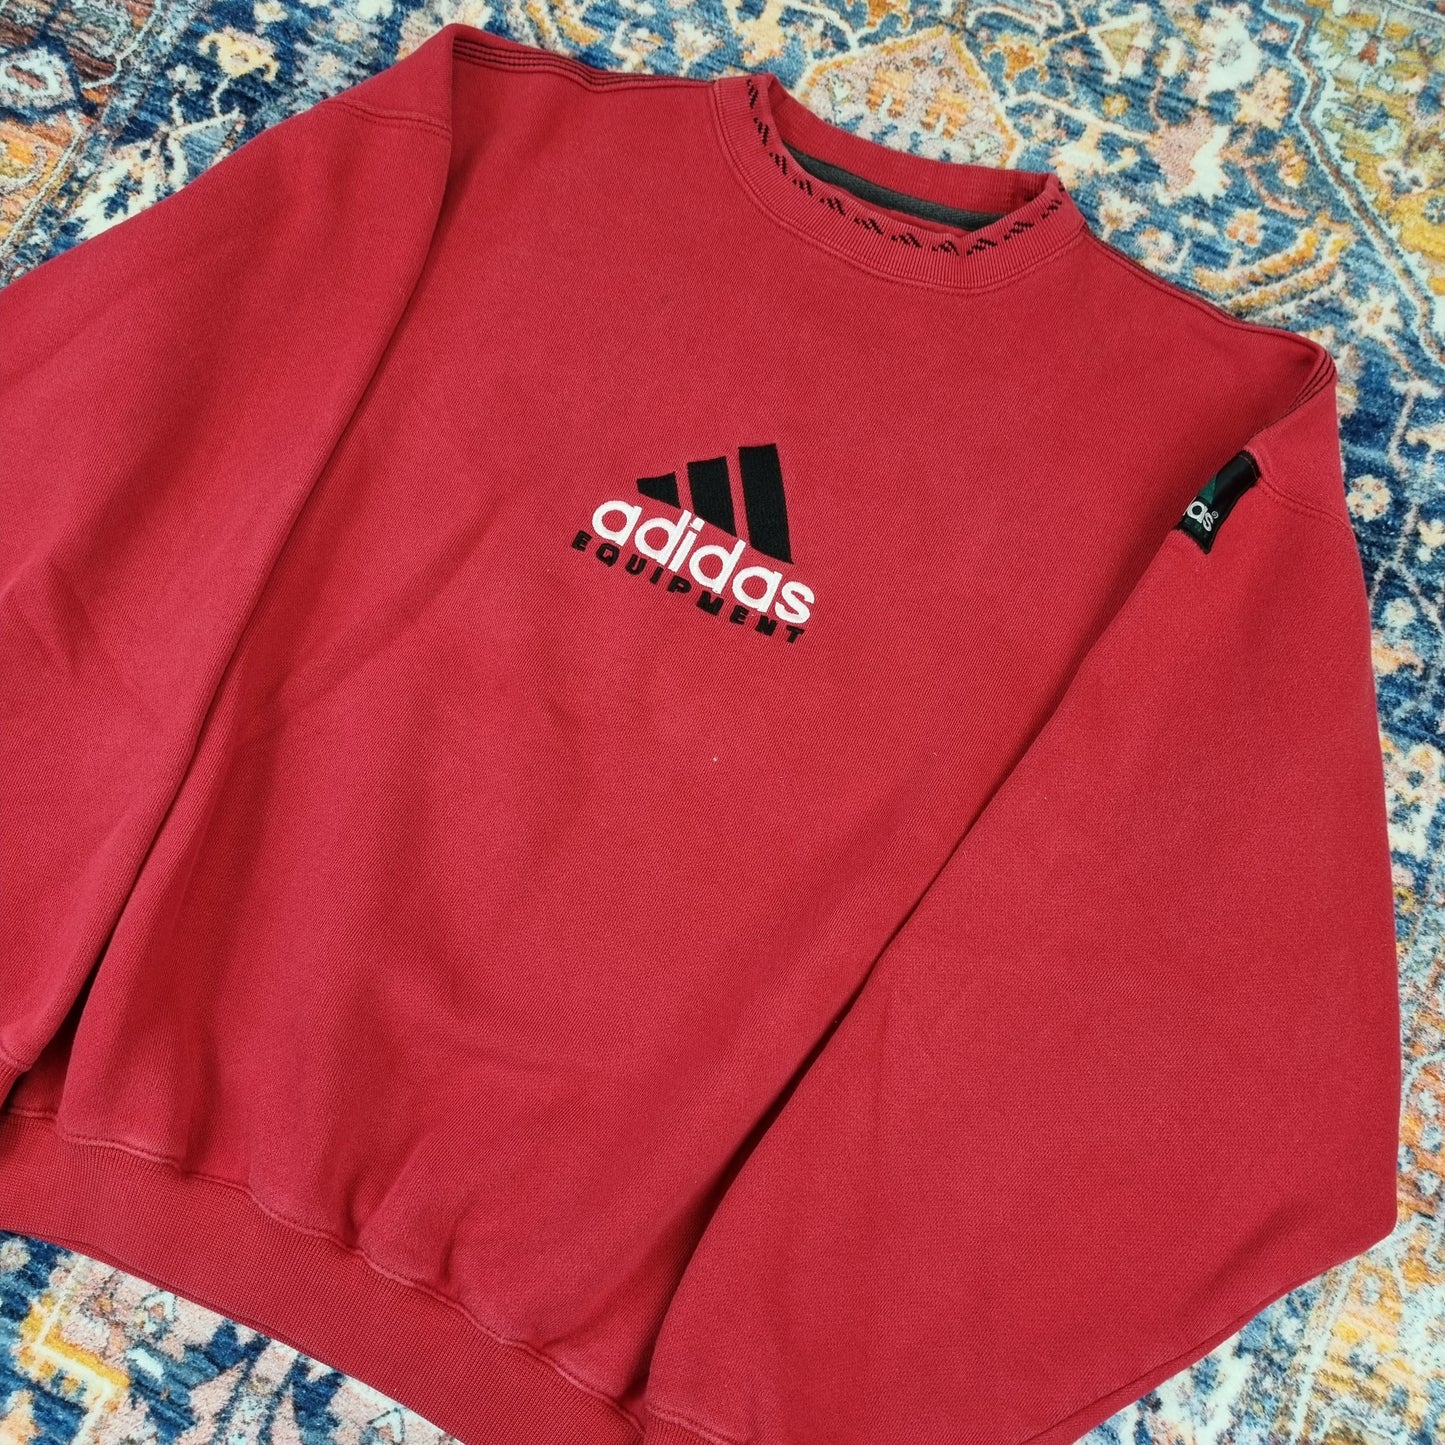 Vintage Adidas Equipment Sweatshirt (S)